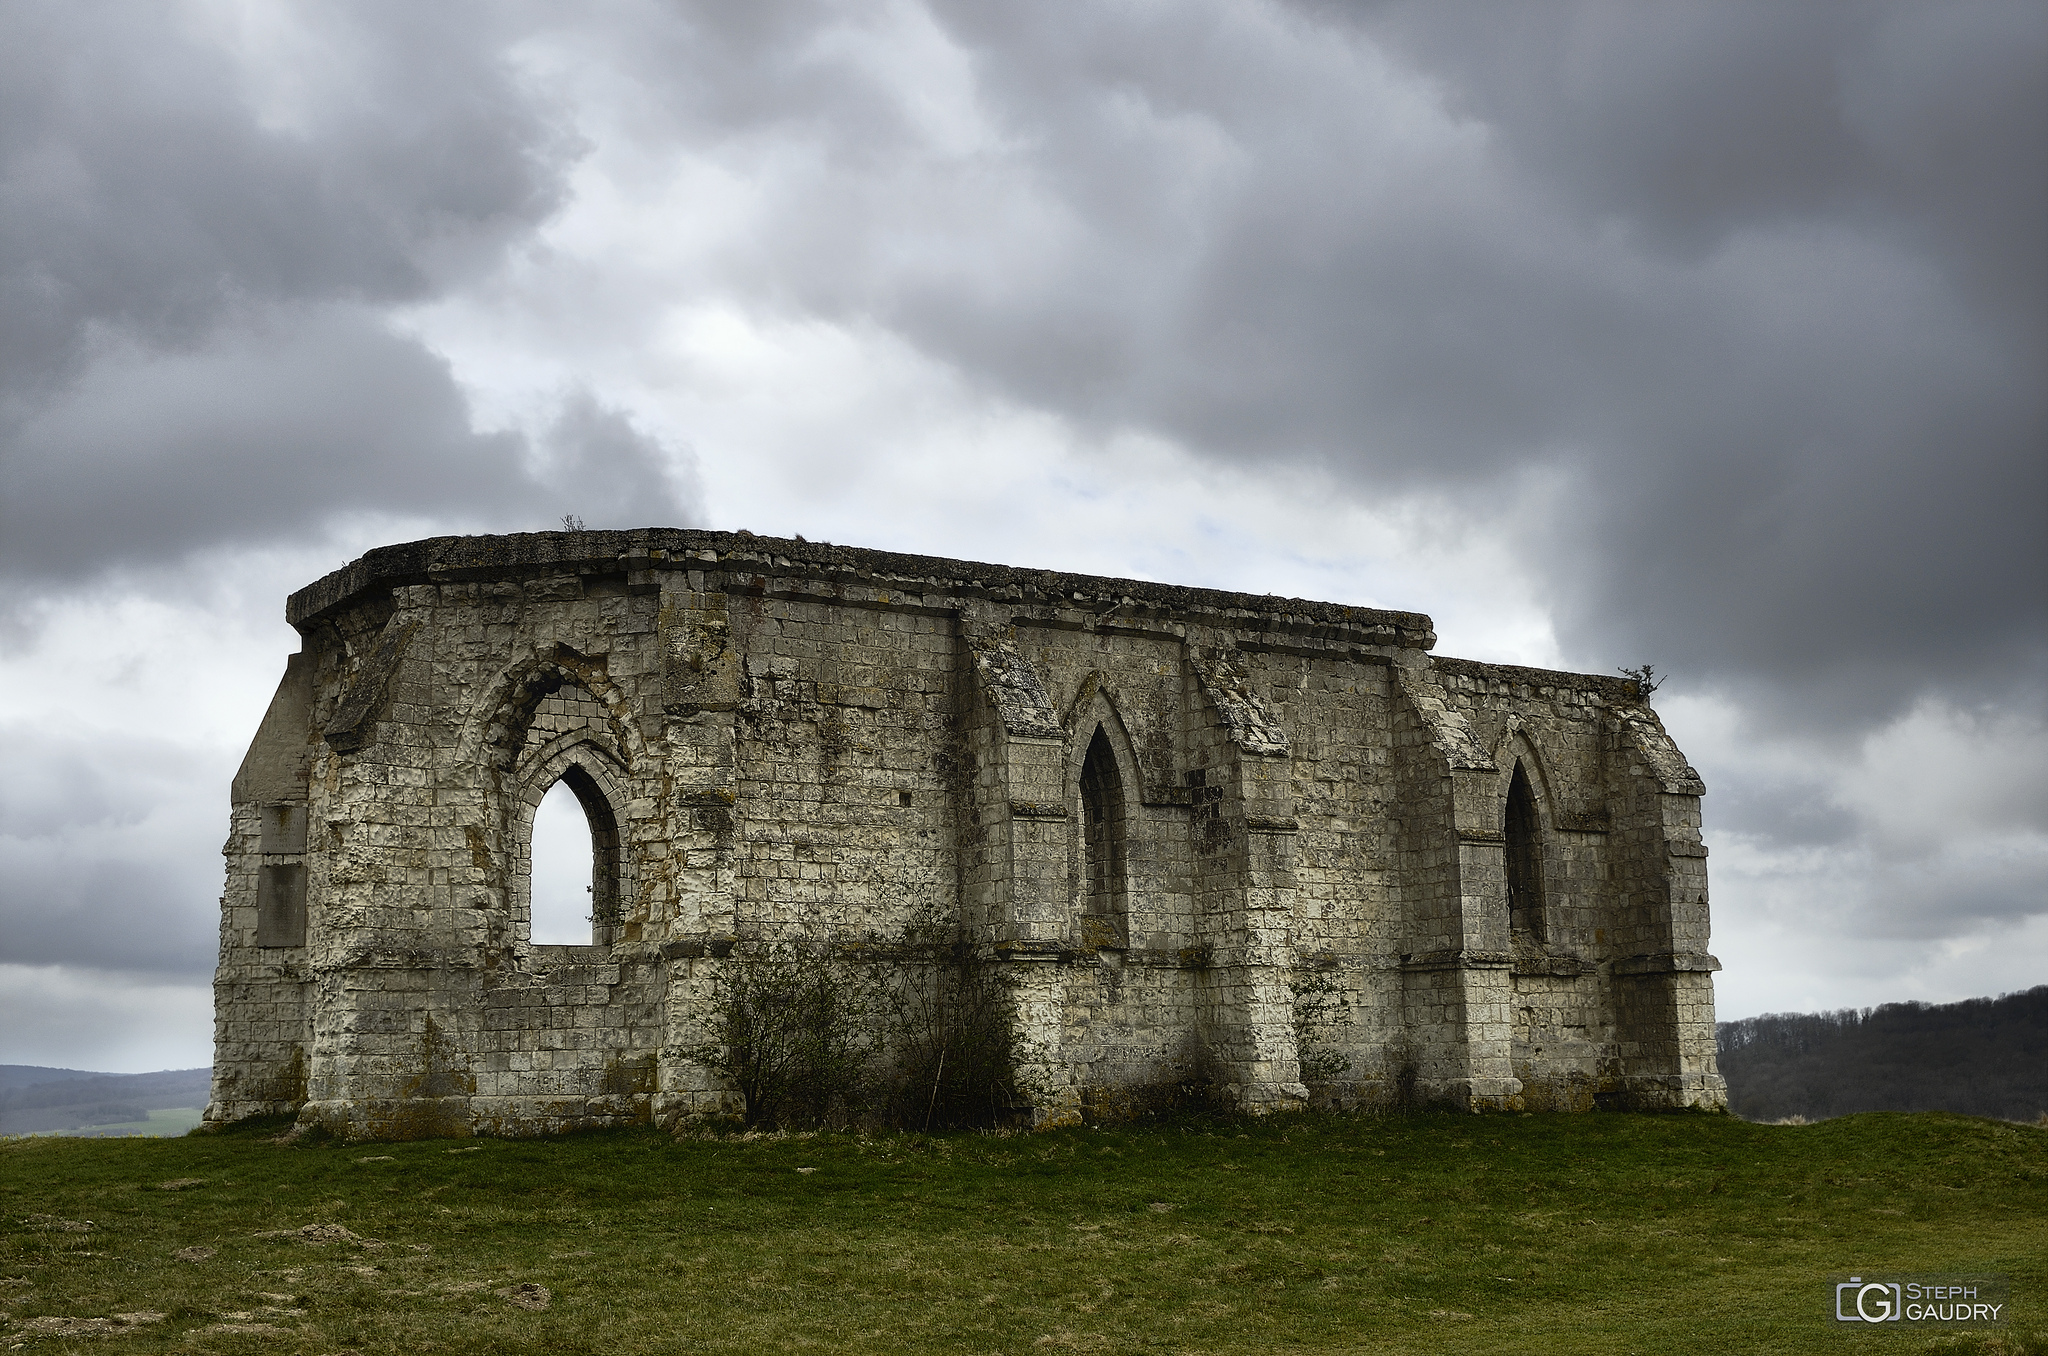 The ruins of the 13th century chapel of Saint Louis at Guémy [Klik om de diavoorstelling te starten]